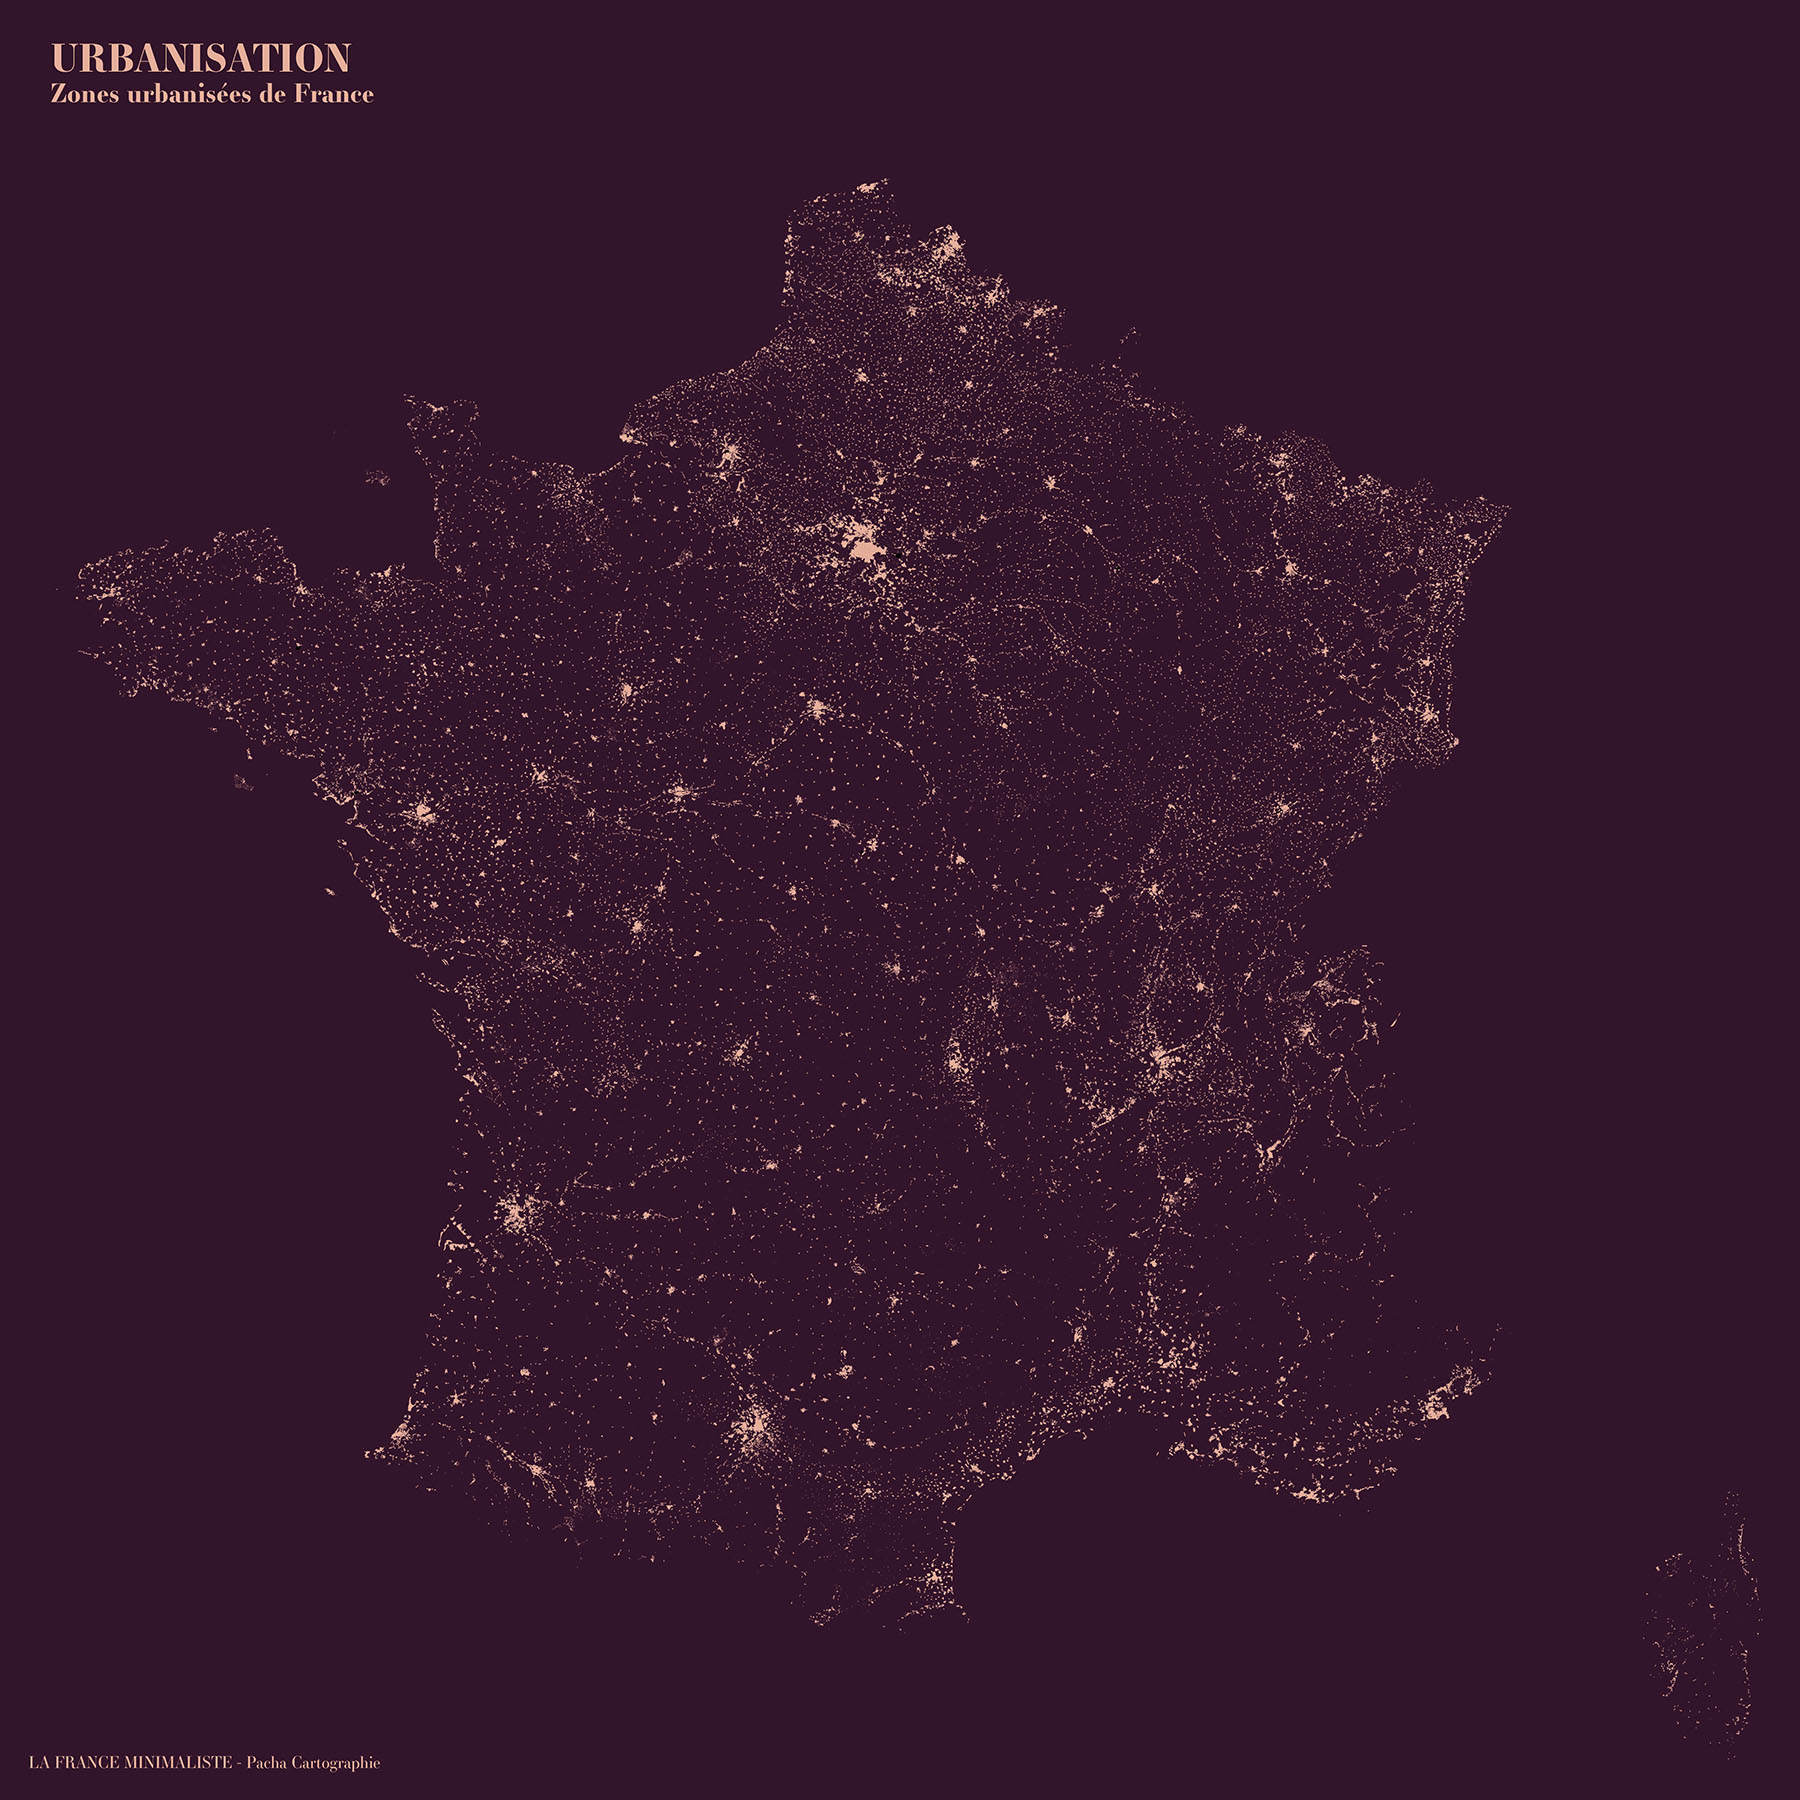 La France minimaliste - Urbanisation - Guillaume Sciaux - Cartographe professionnel